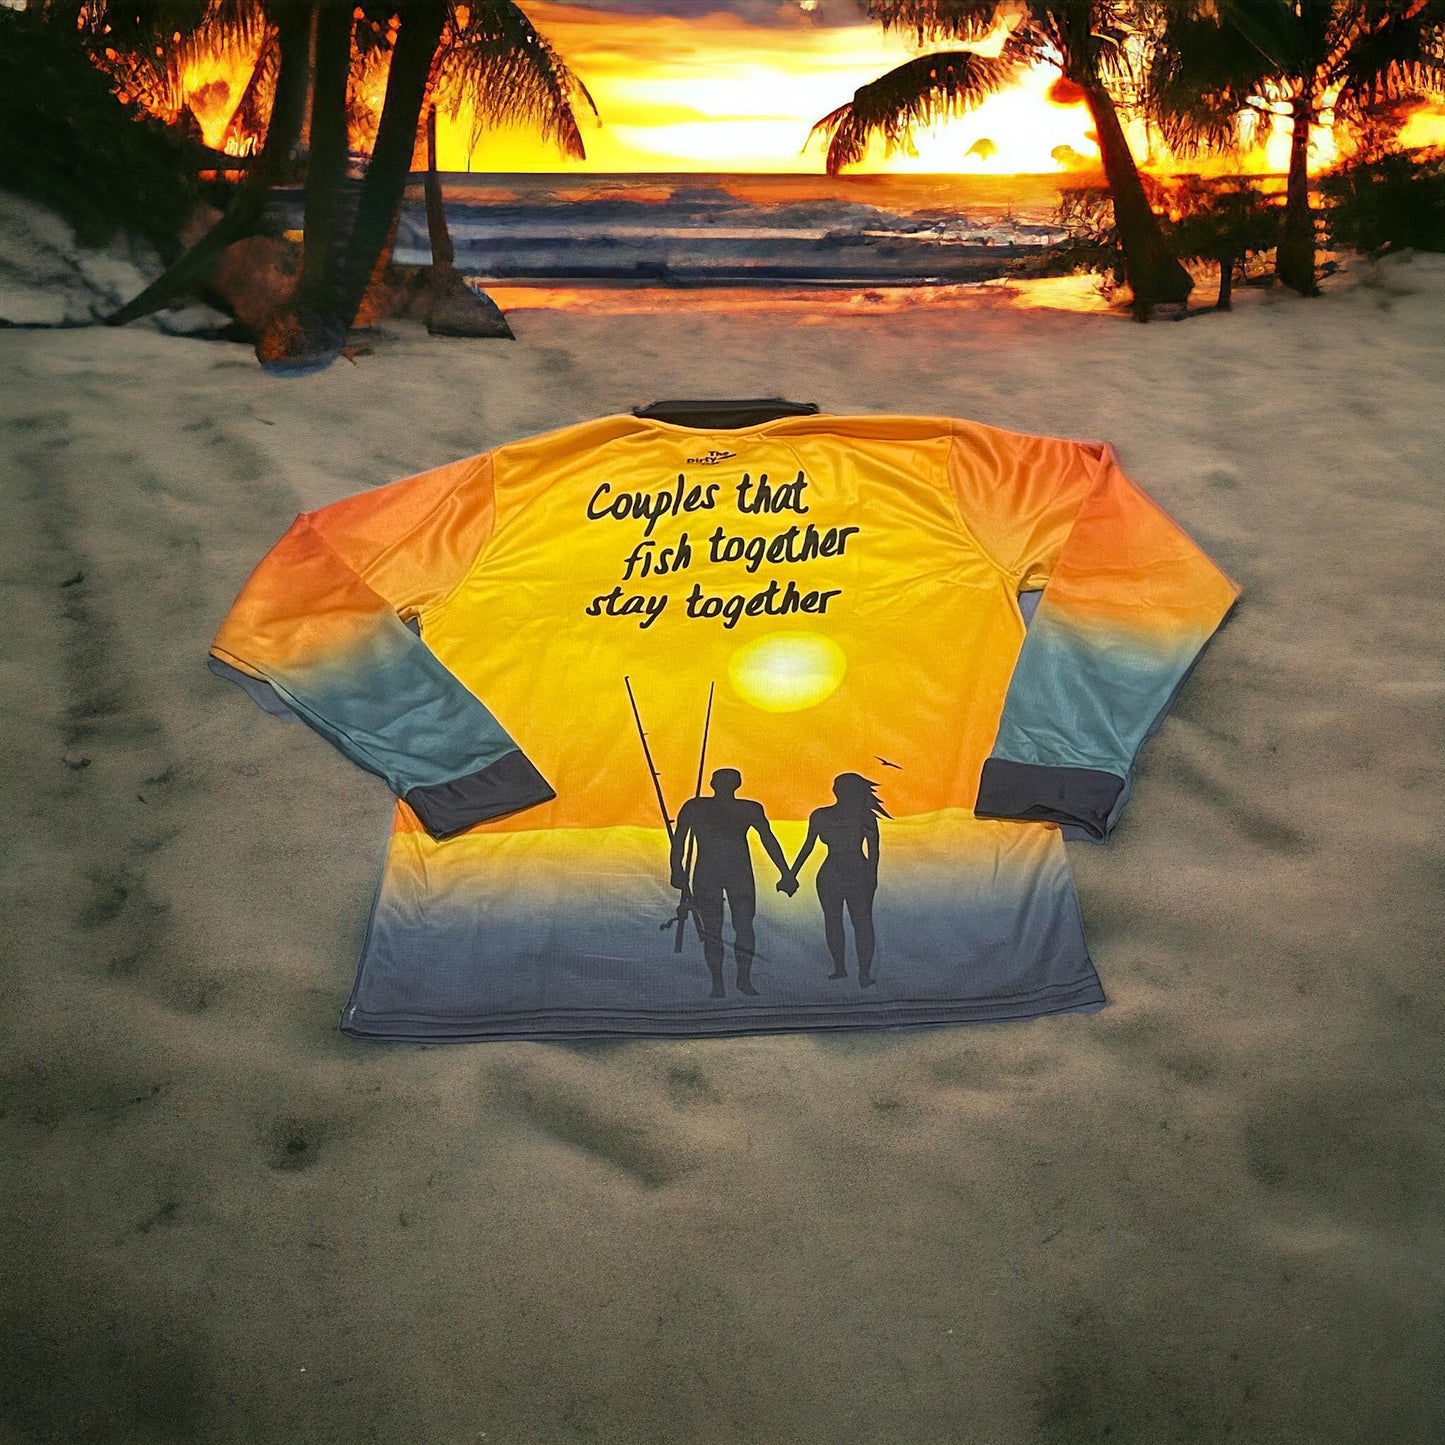 The Couples Fishing Shirt